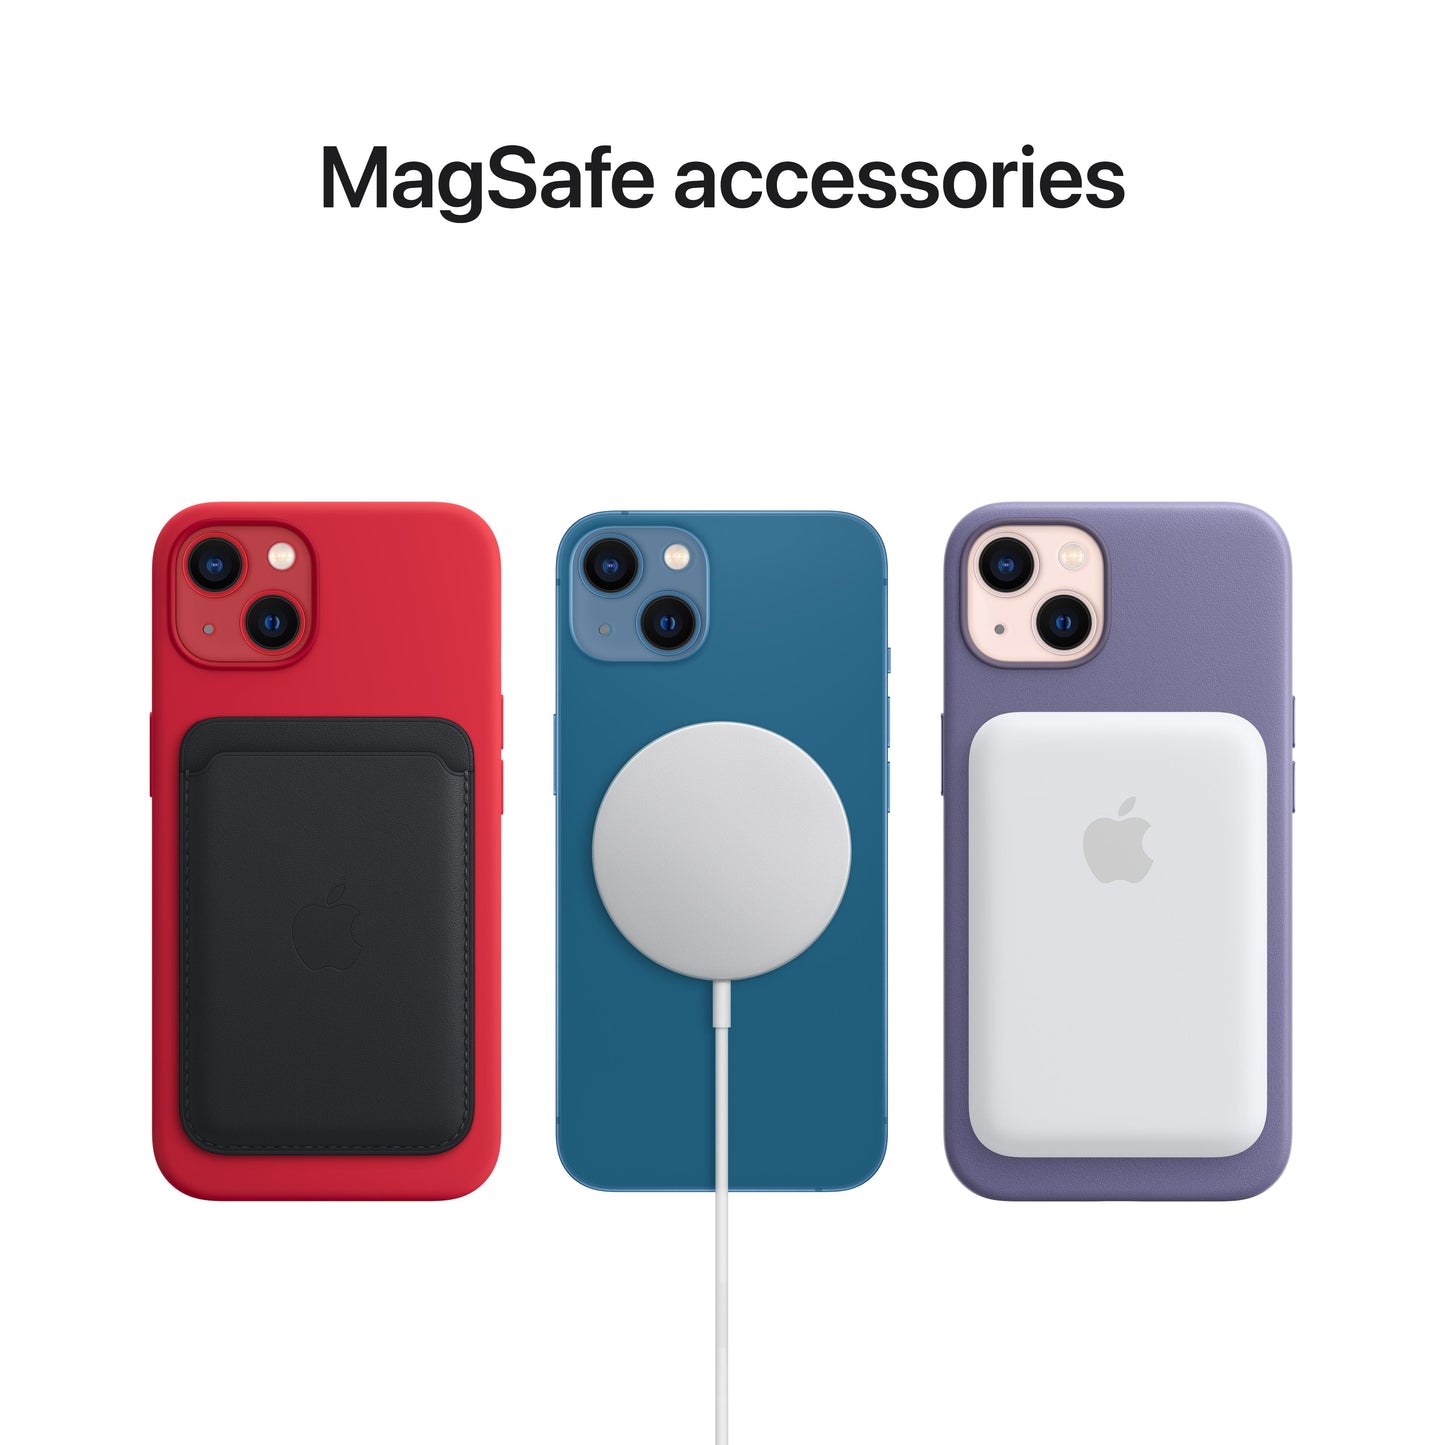 iPhone 13 mini Silicone Case with MagSafe - Lemon Zest